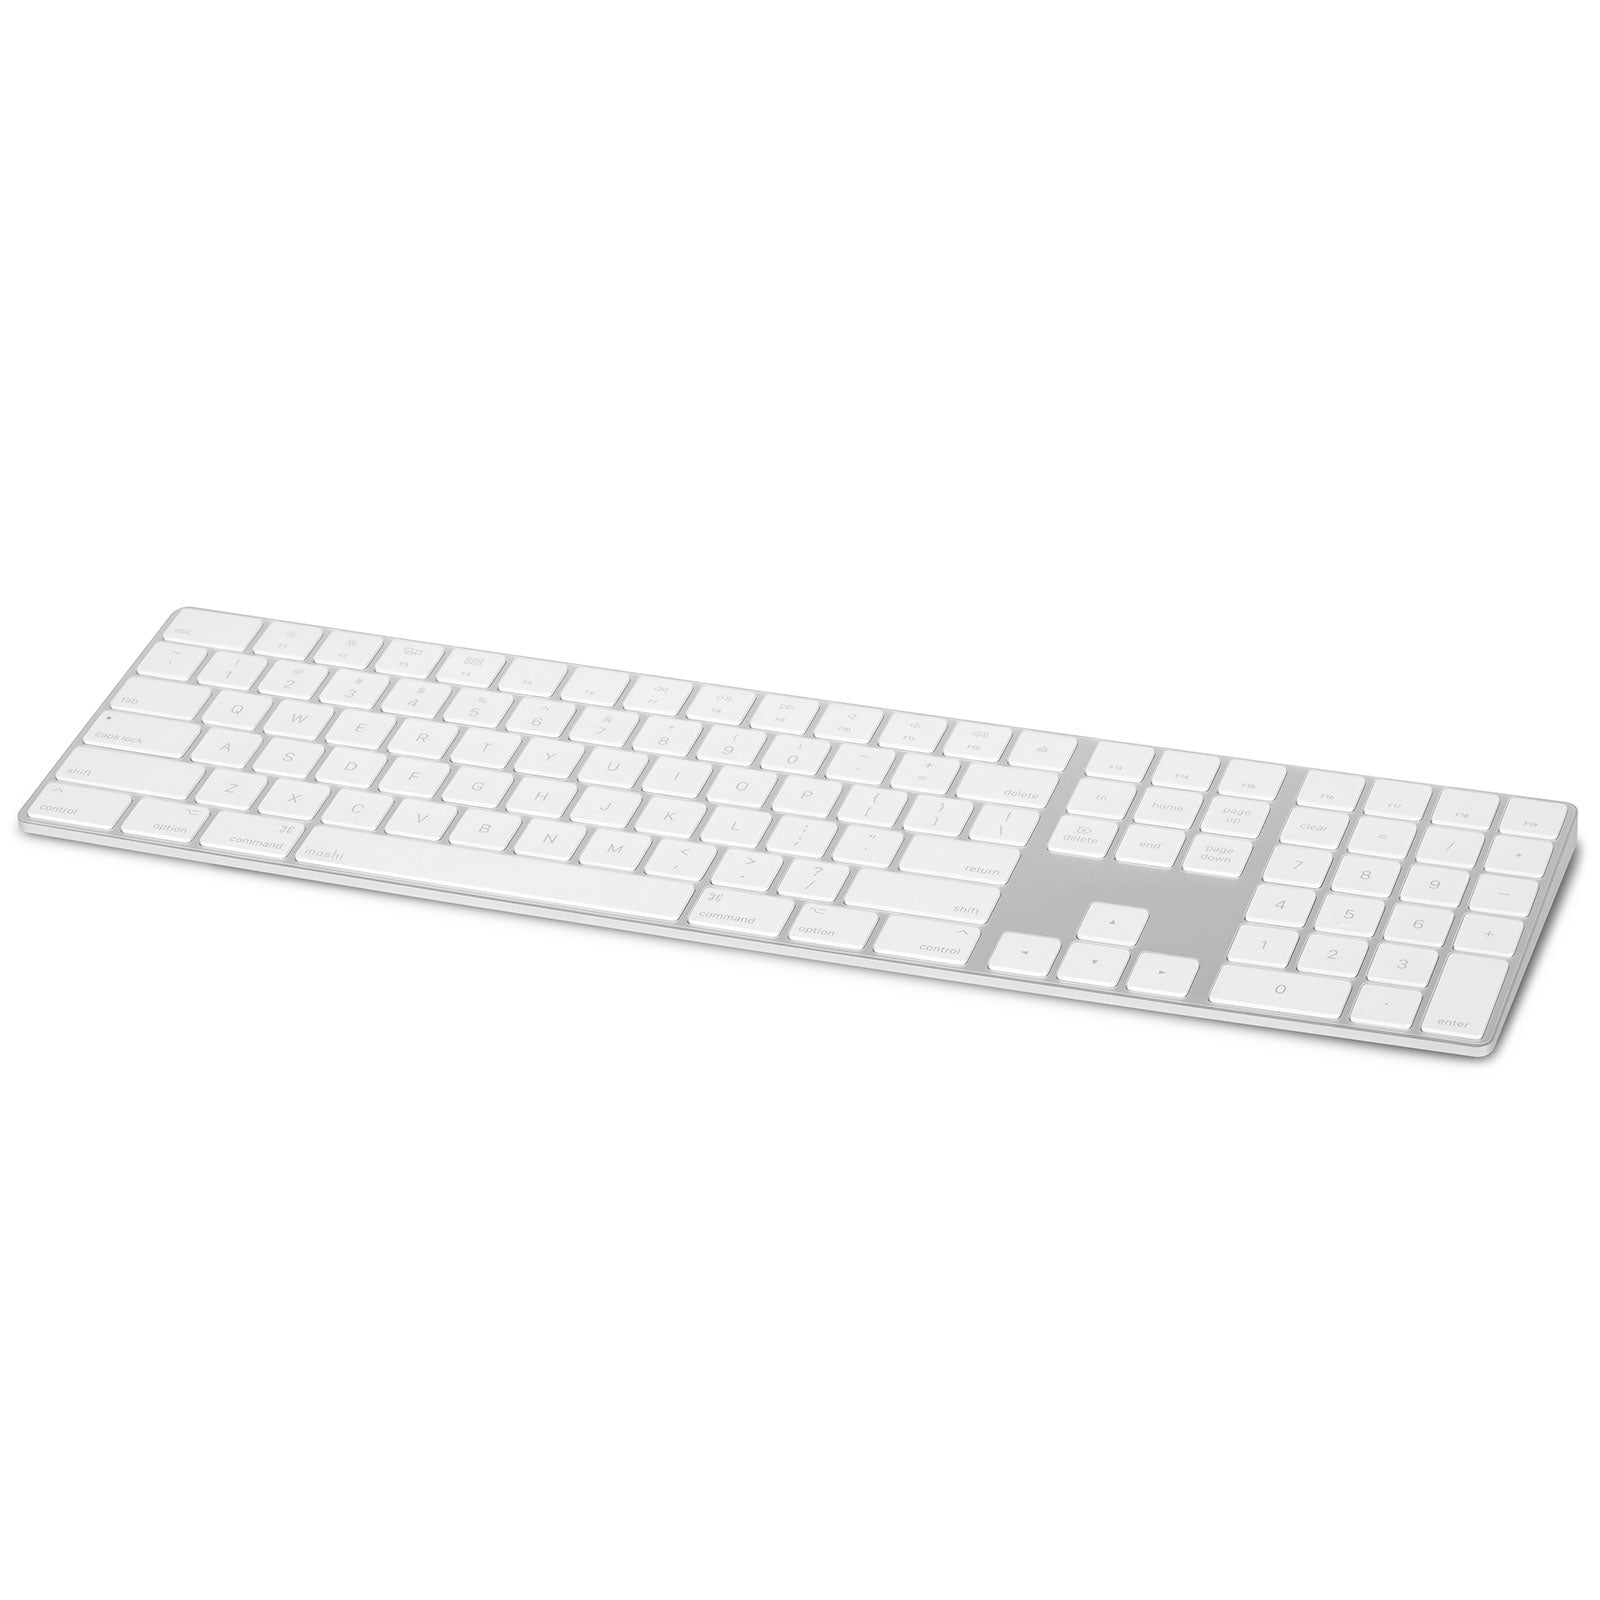 Moshi ClearGuard Keyboard Protector US Layout for Magic Keyboard